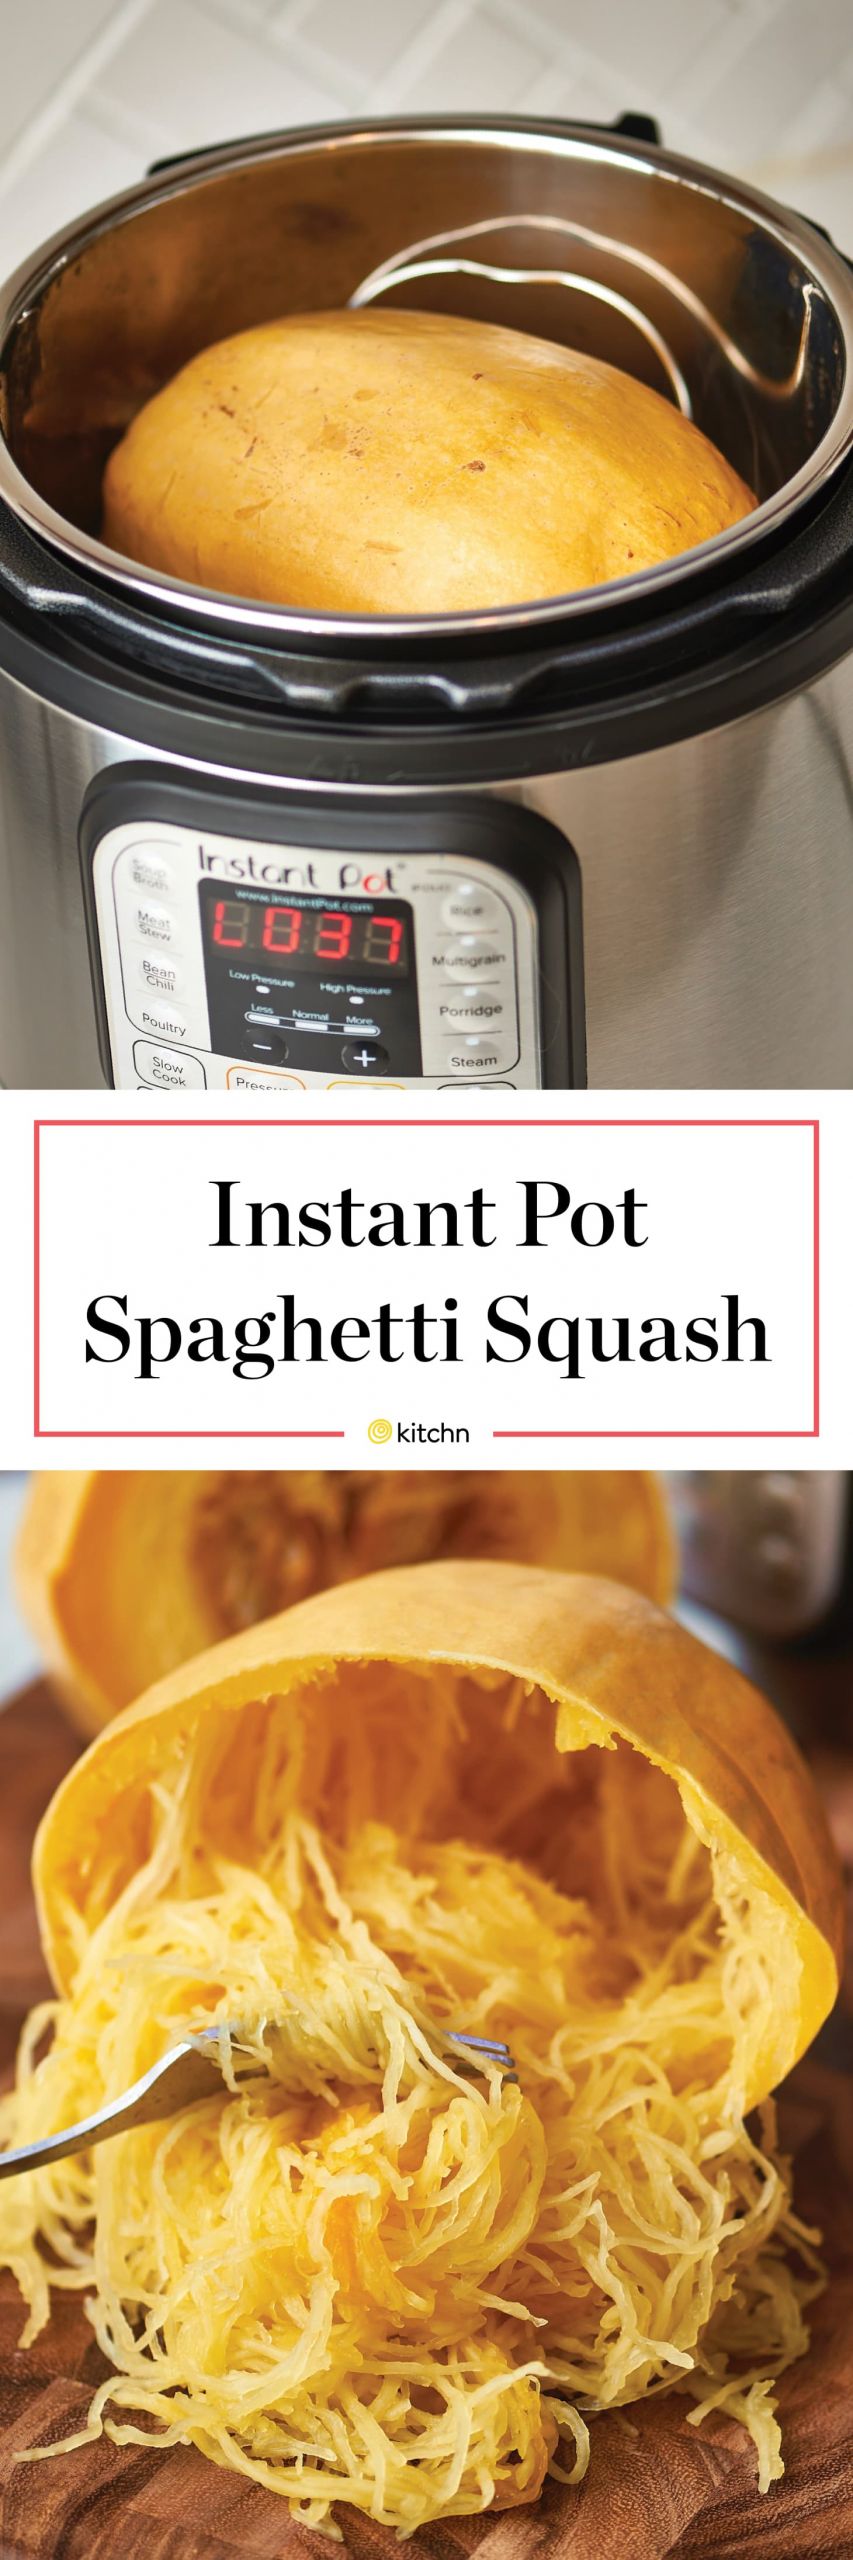 Pressure Cook Spaghetti
 How To Cook Spaghetti Squash in an Electric Pressure